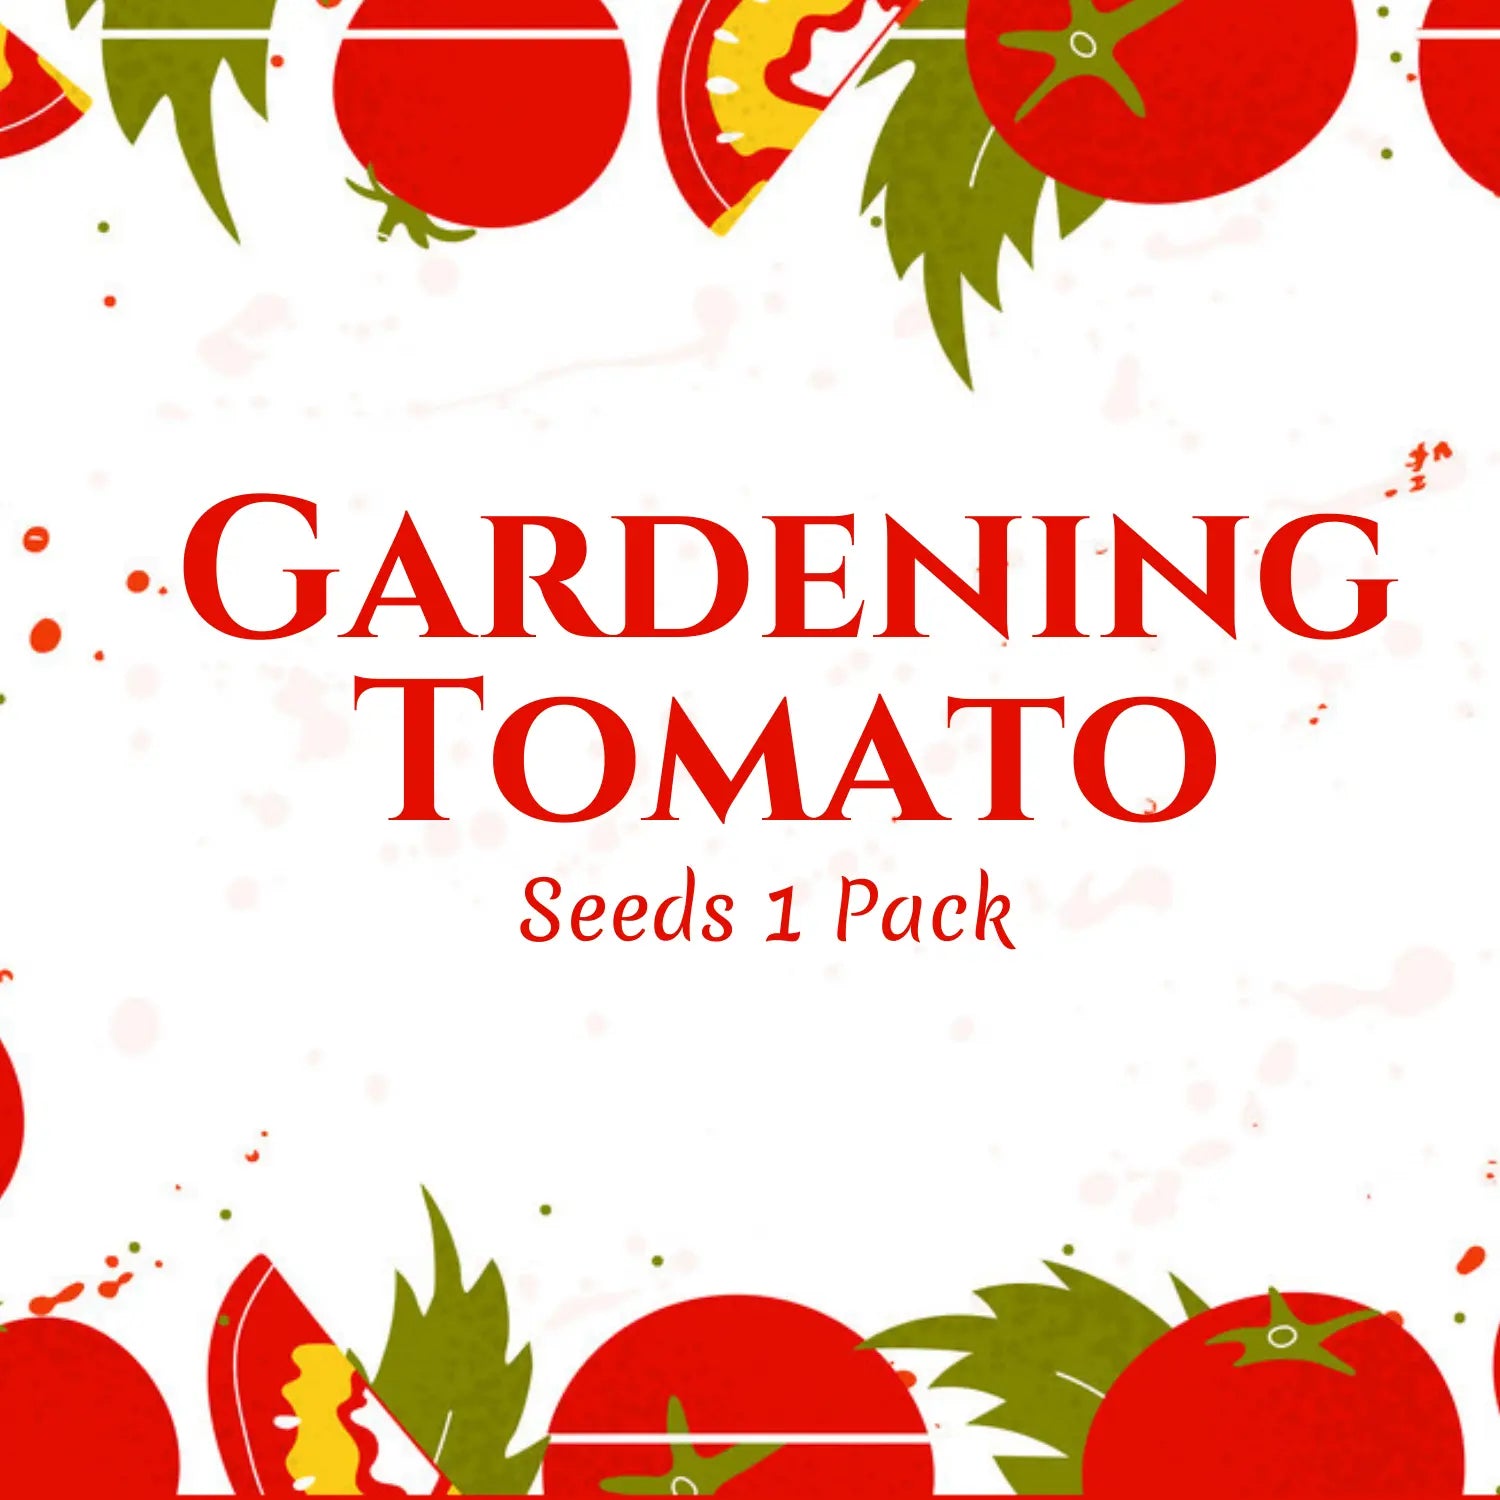 Gardening Tomato Seeds 1 Pack